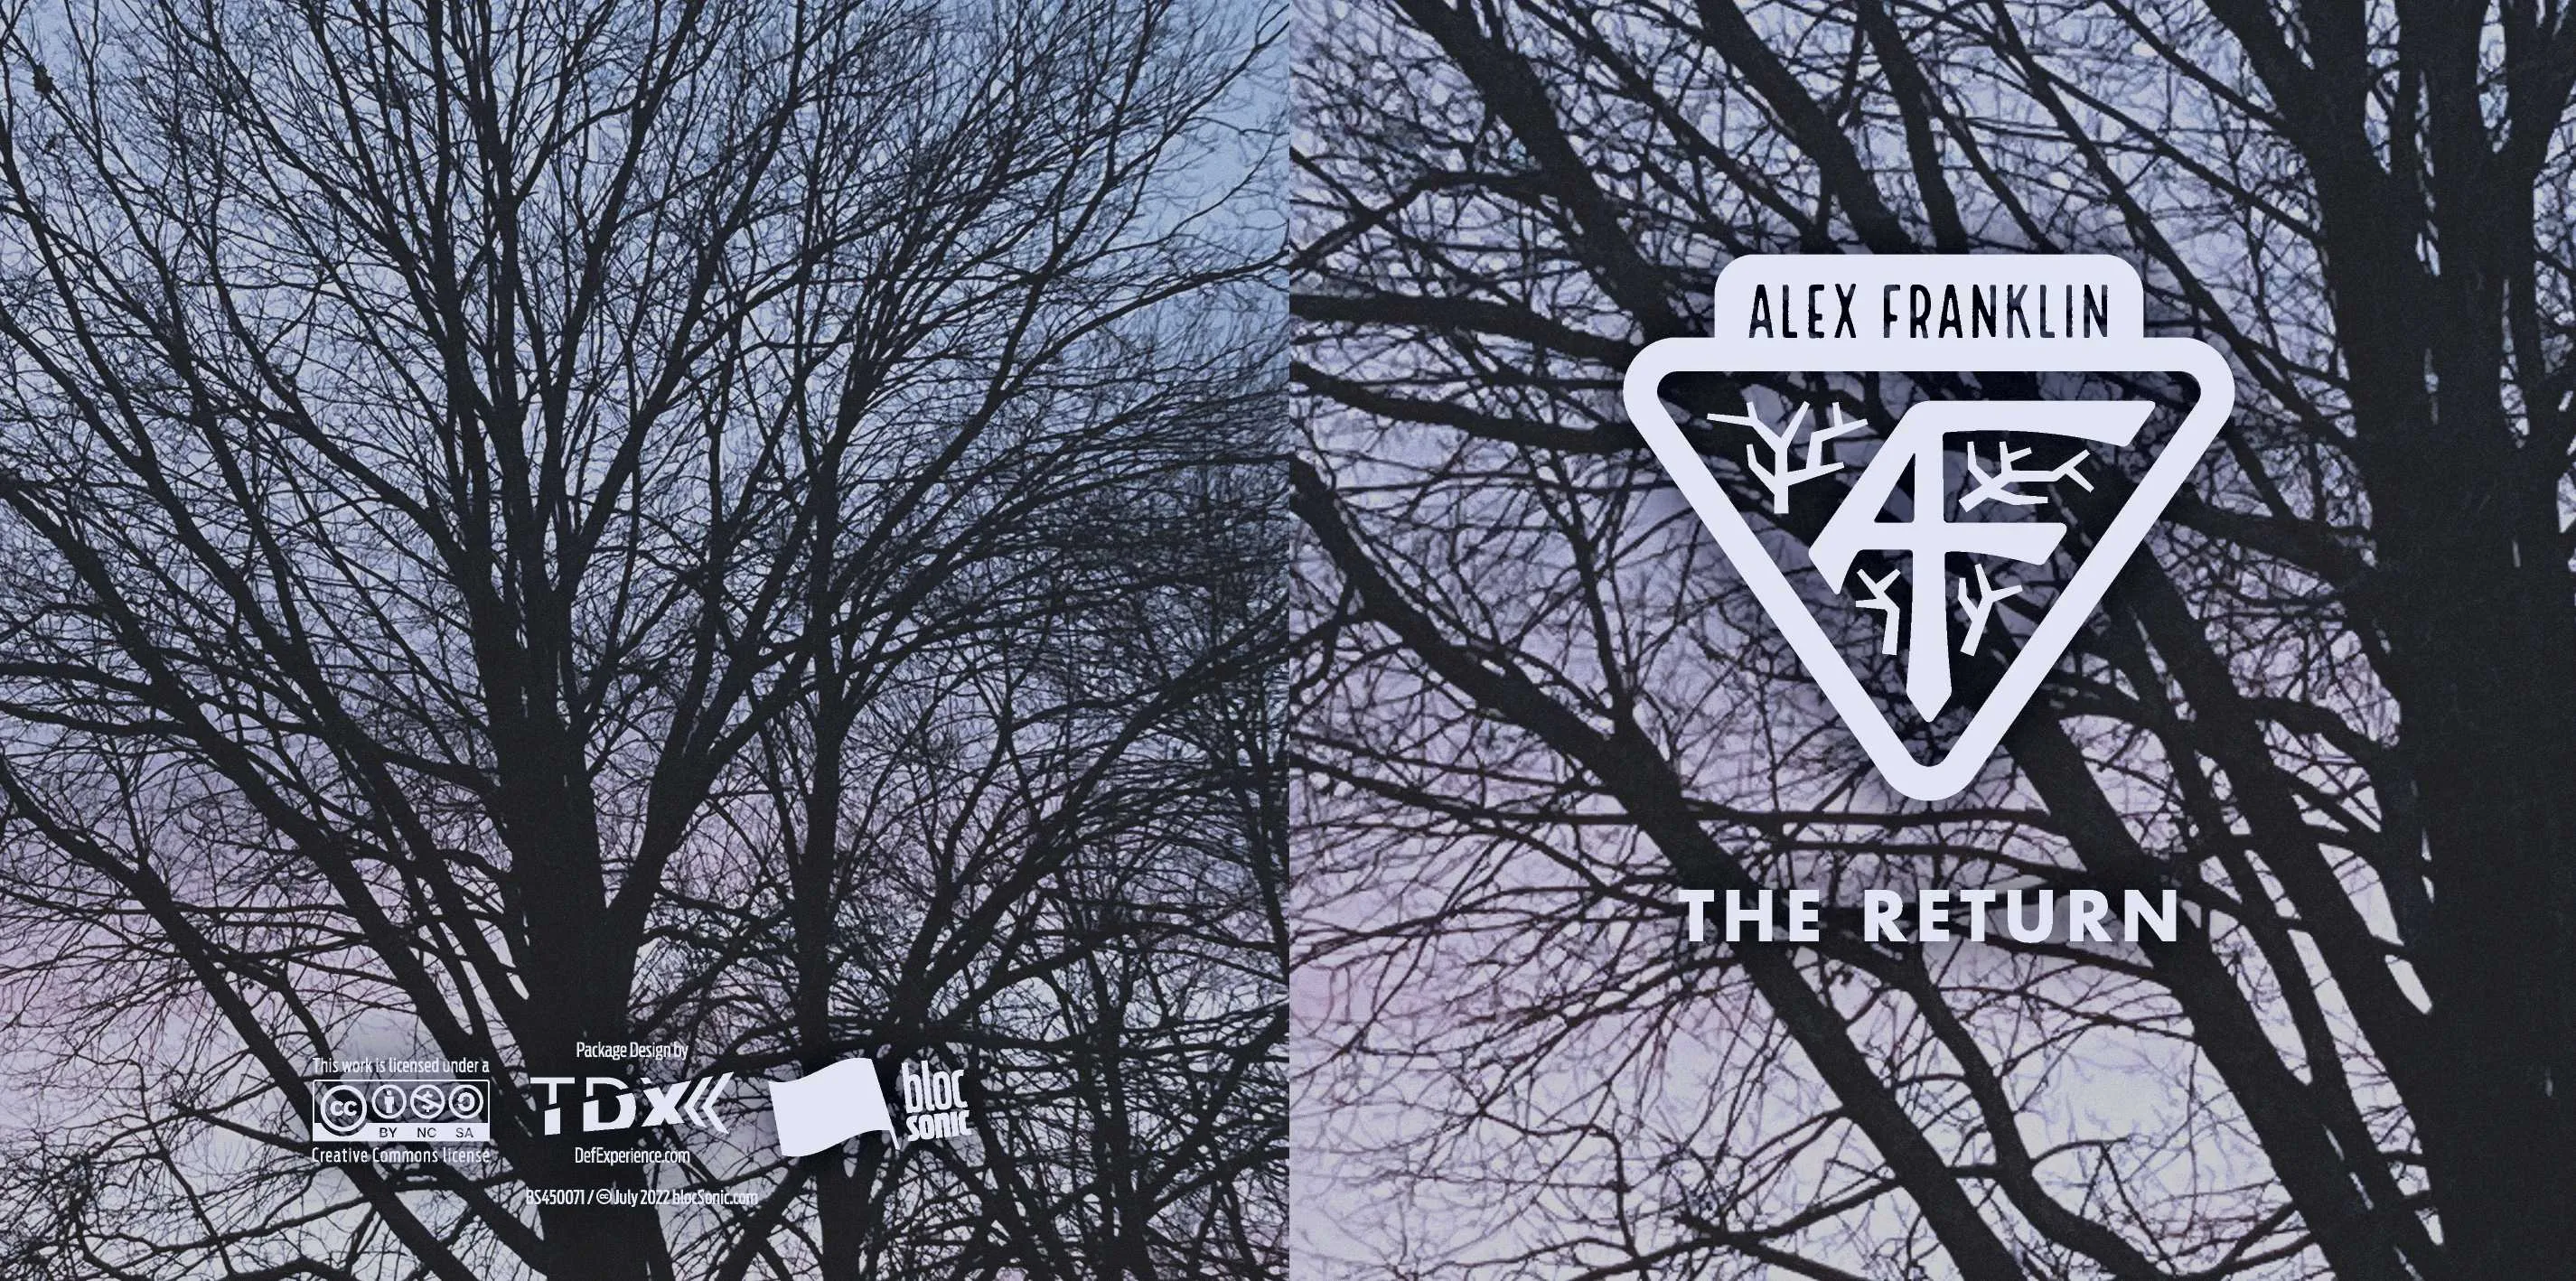 Album insert for “The Return” by Alex Franklin